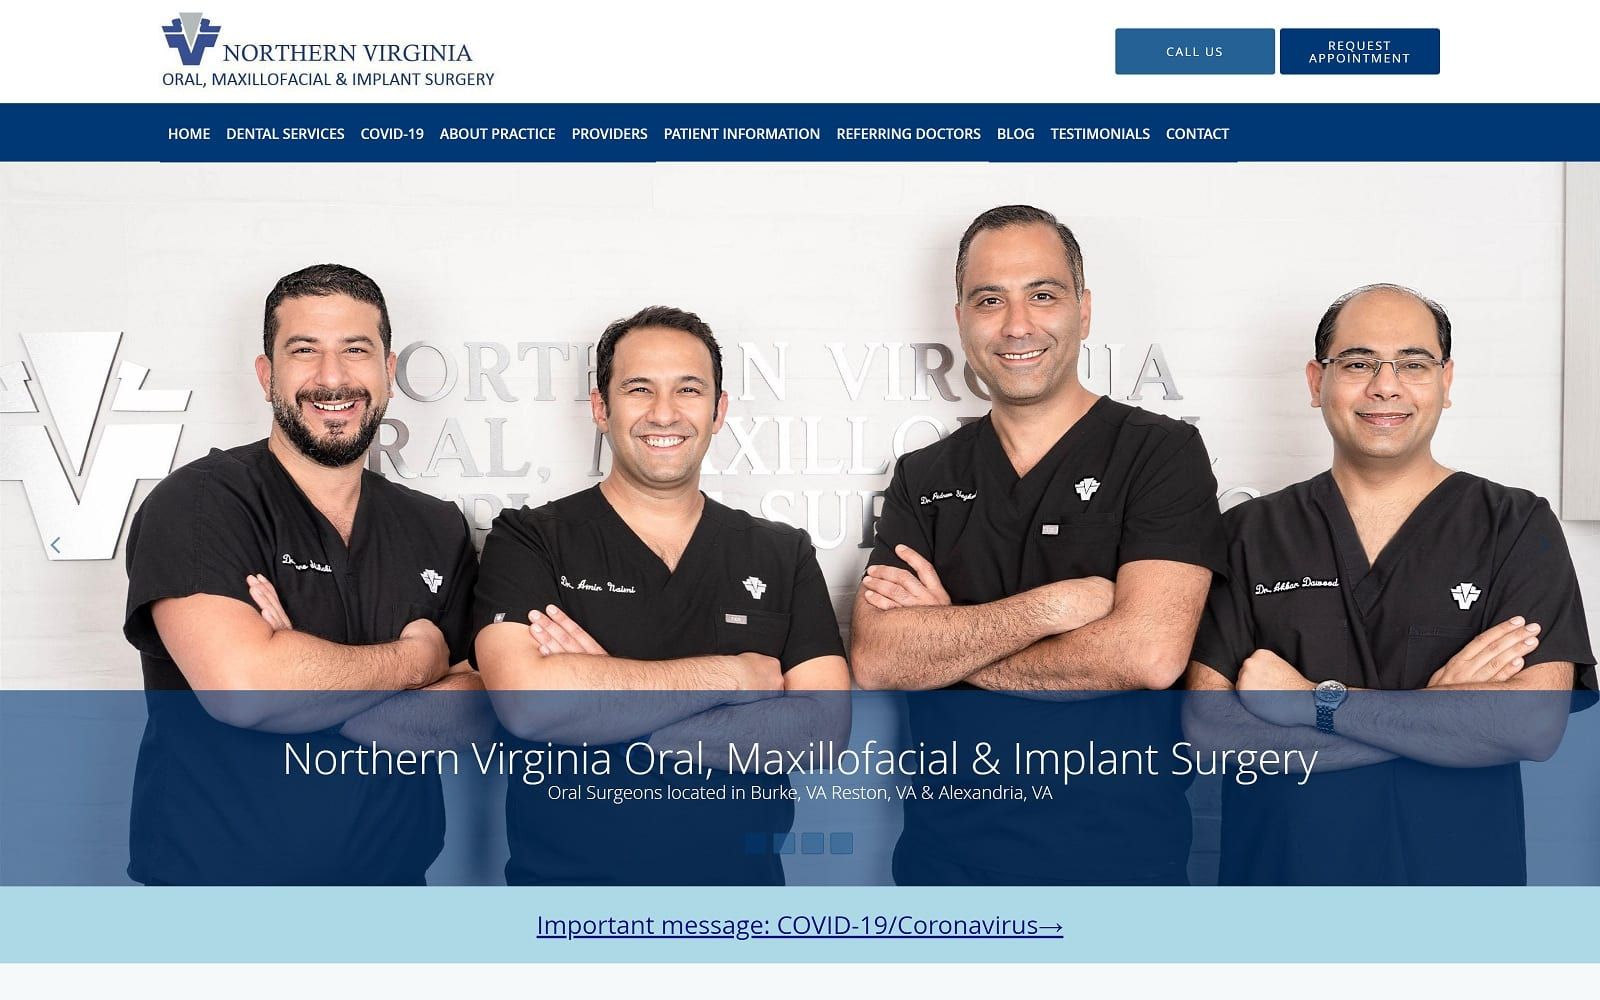 The screenshot of northern virginia oral, maxillofacial & implant surgery novaoms. Com website